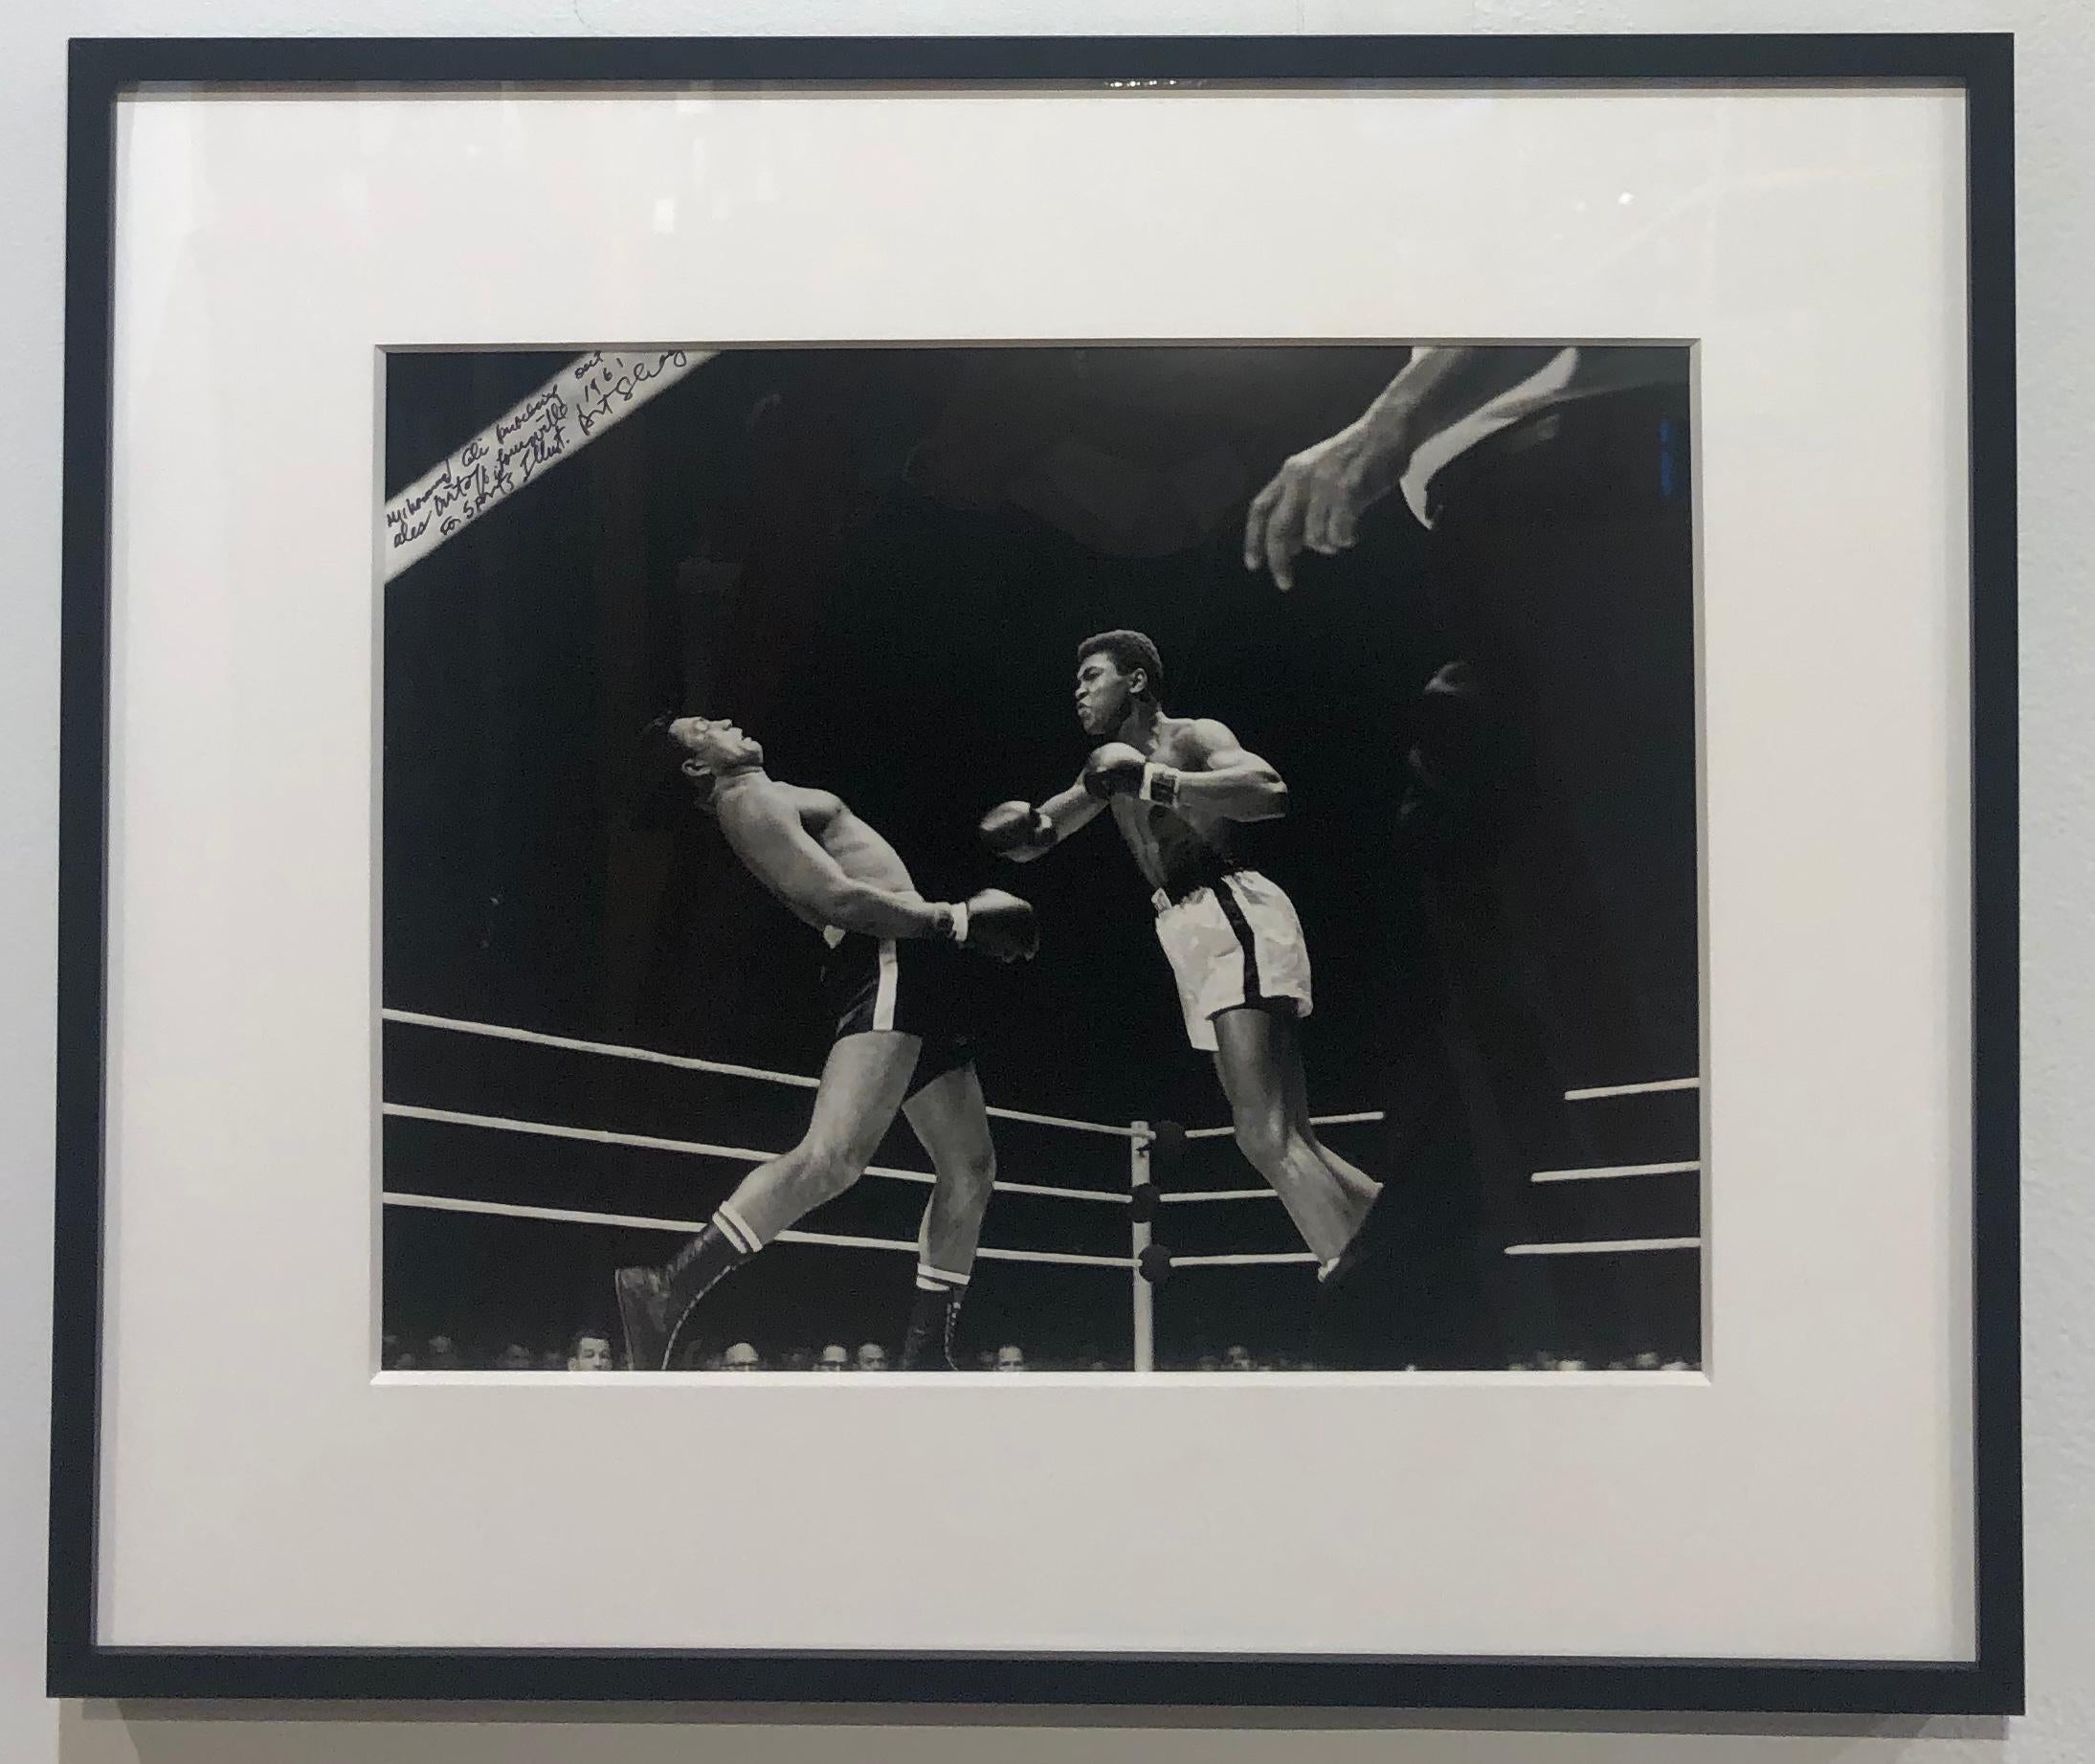 Muhammad Ali TKO Punch vs Alex Miteff, Louisville 1961, Black & White Photo - Photograph by Art Shay